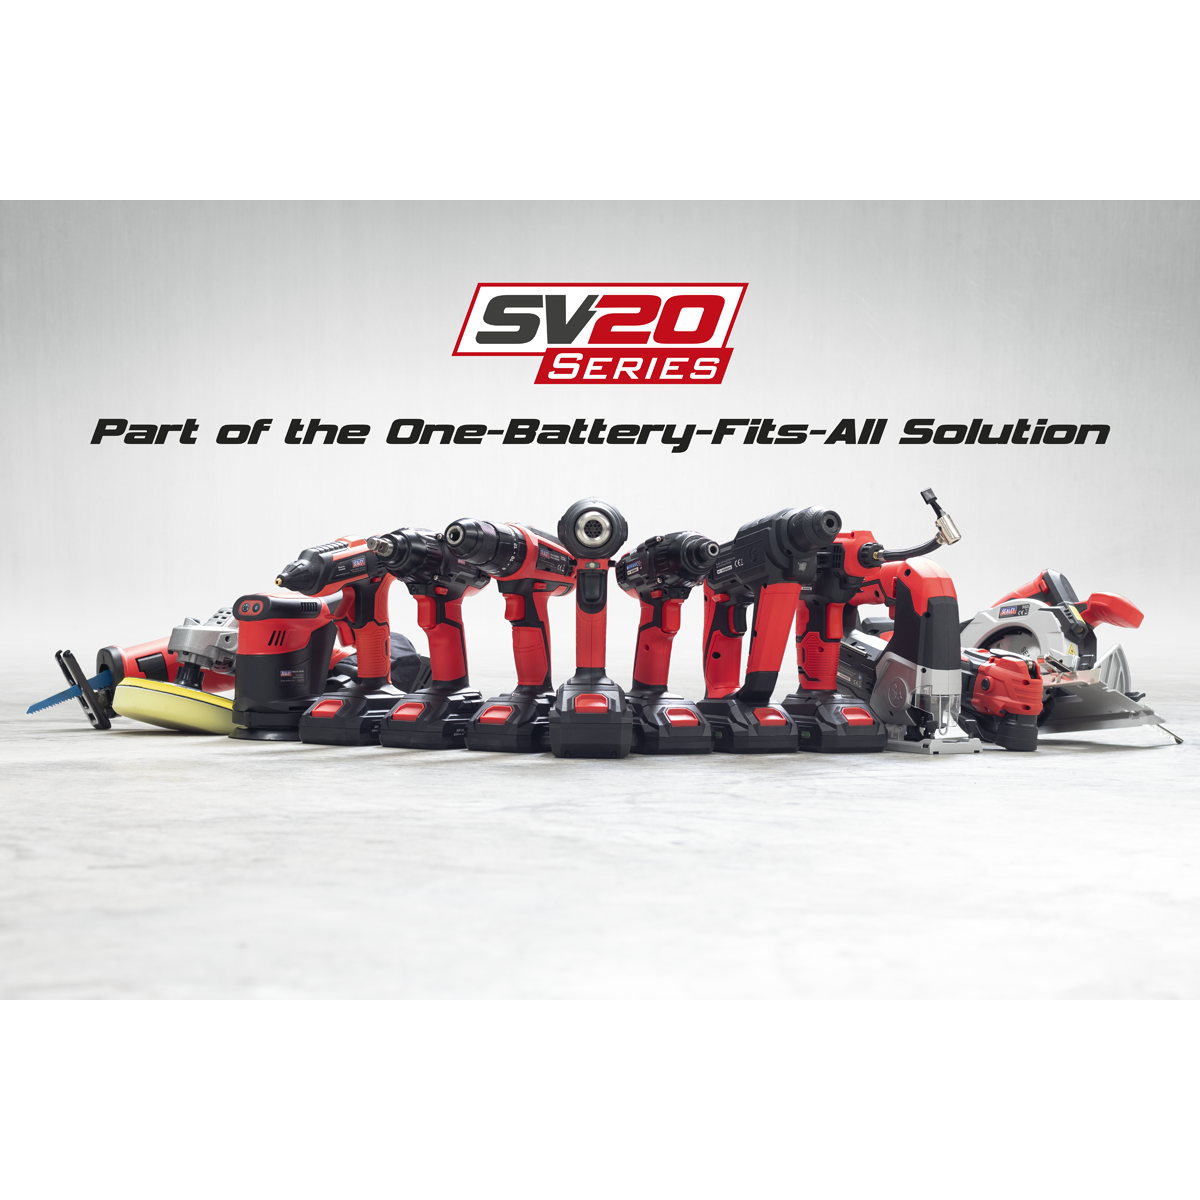 2 x 20V SV20 Series Cordless Router & Combi Drill Kit - 2 Batteries